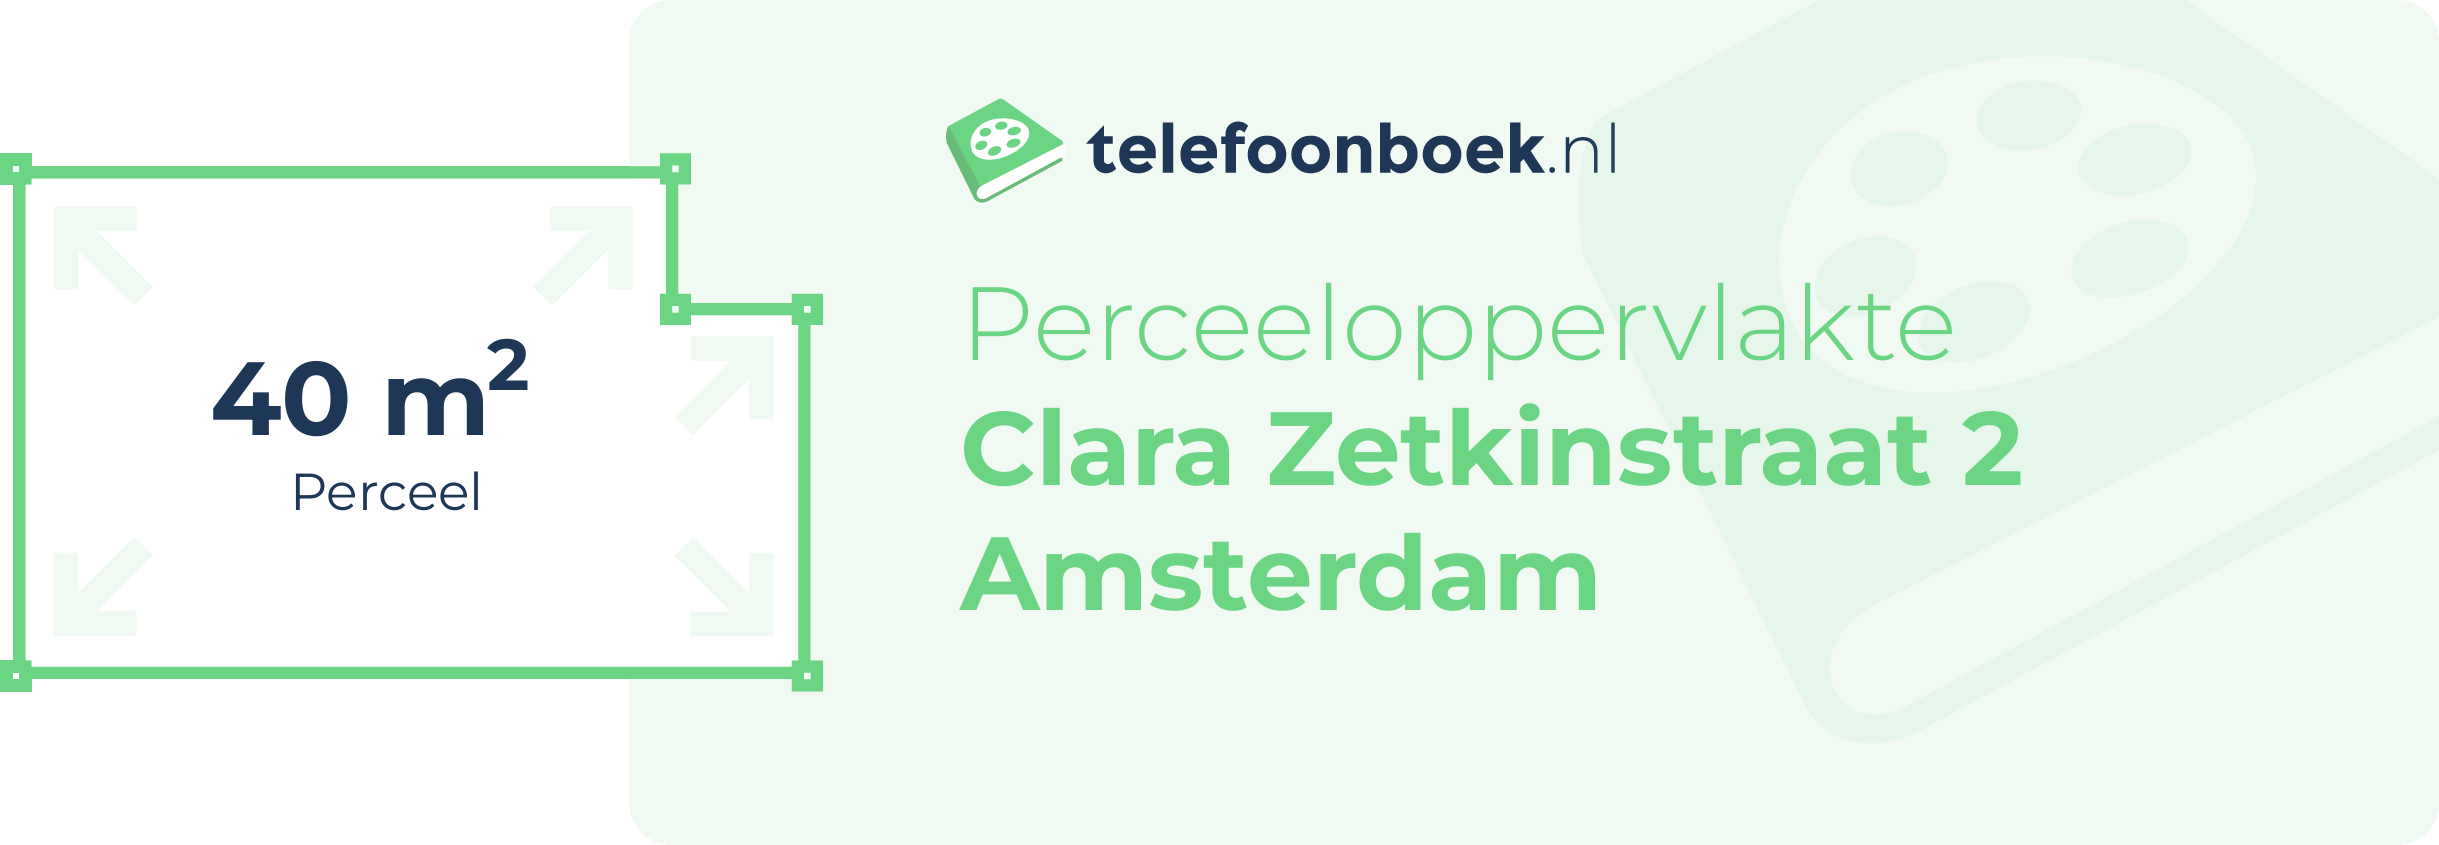 Perceeloppervlakte Clara Zetkinstraat 2 Amsterdam